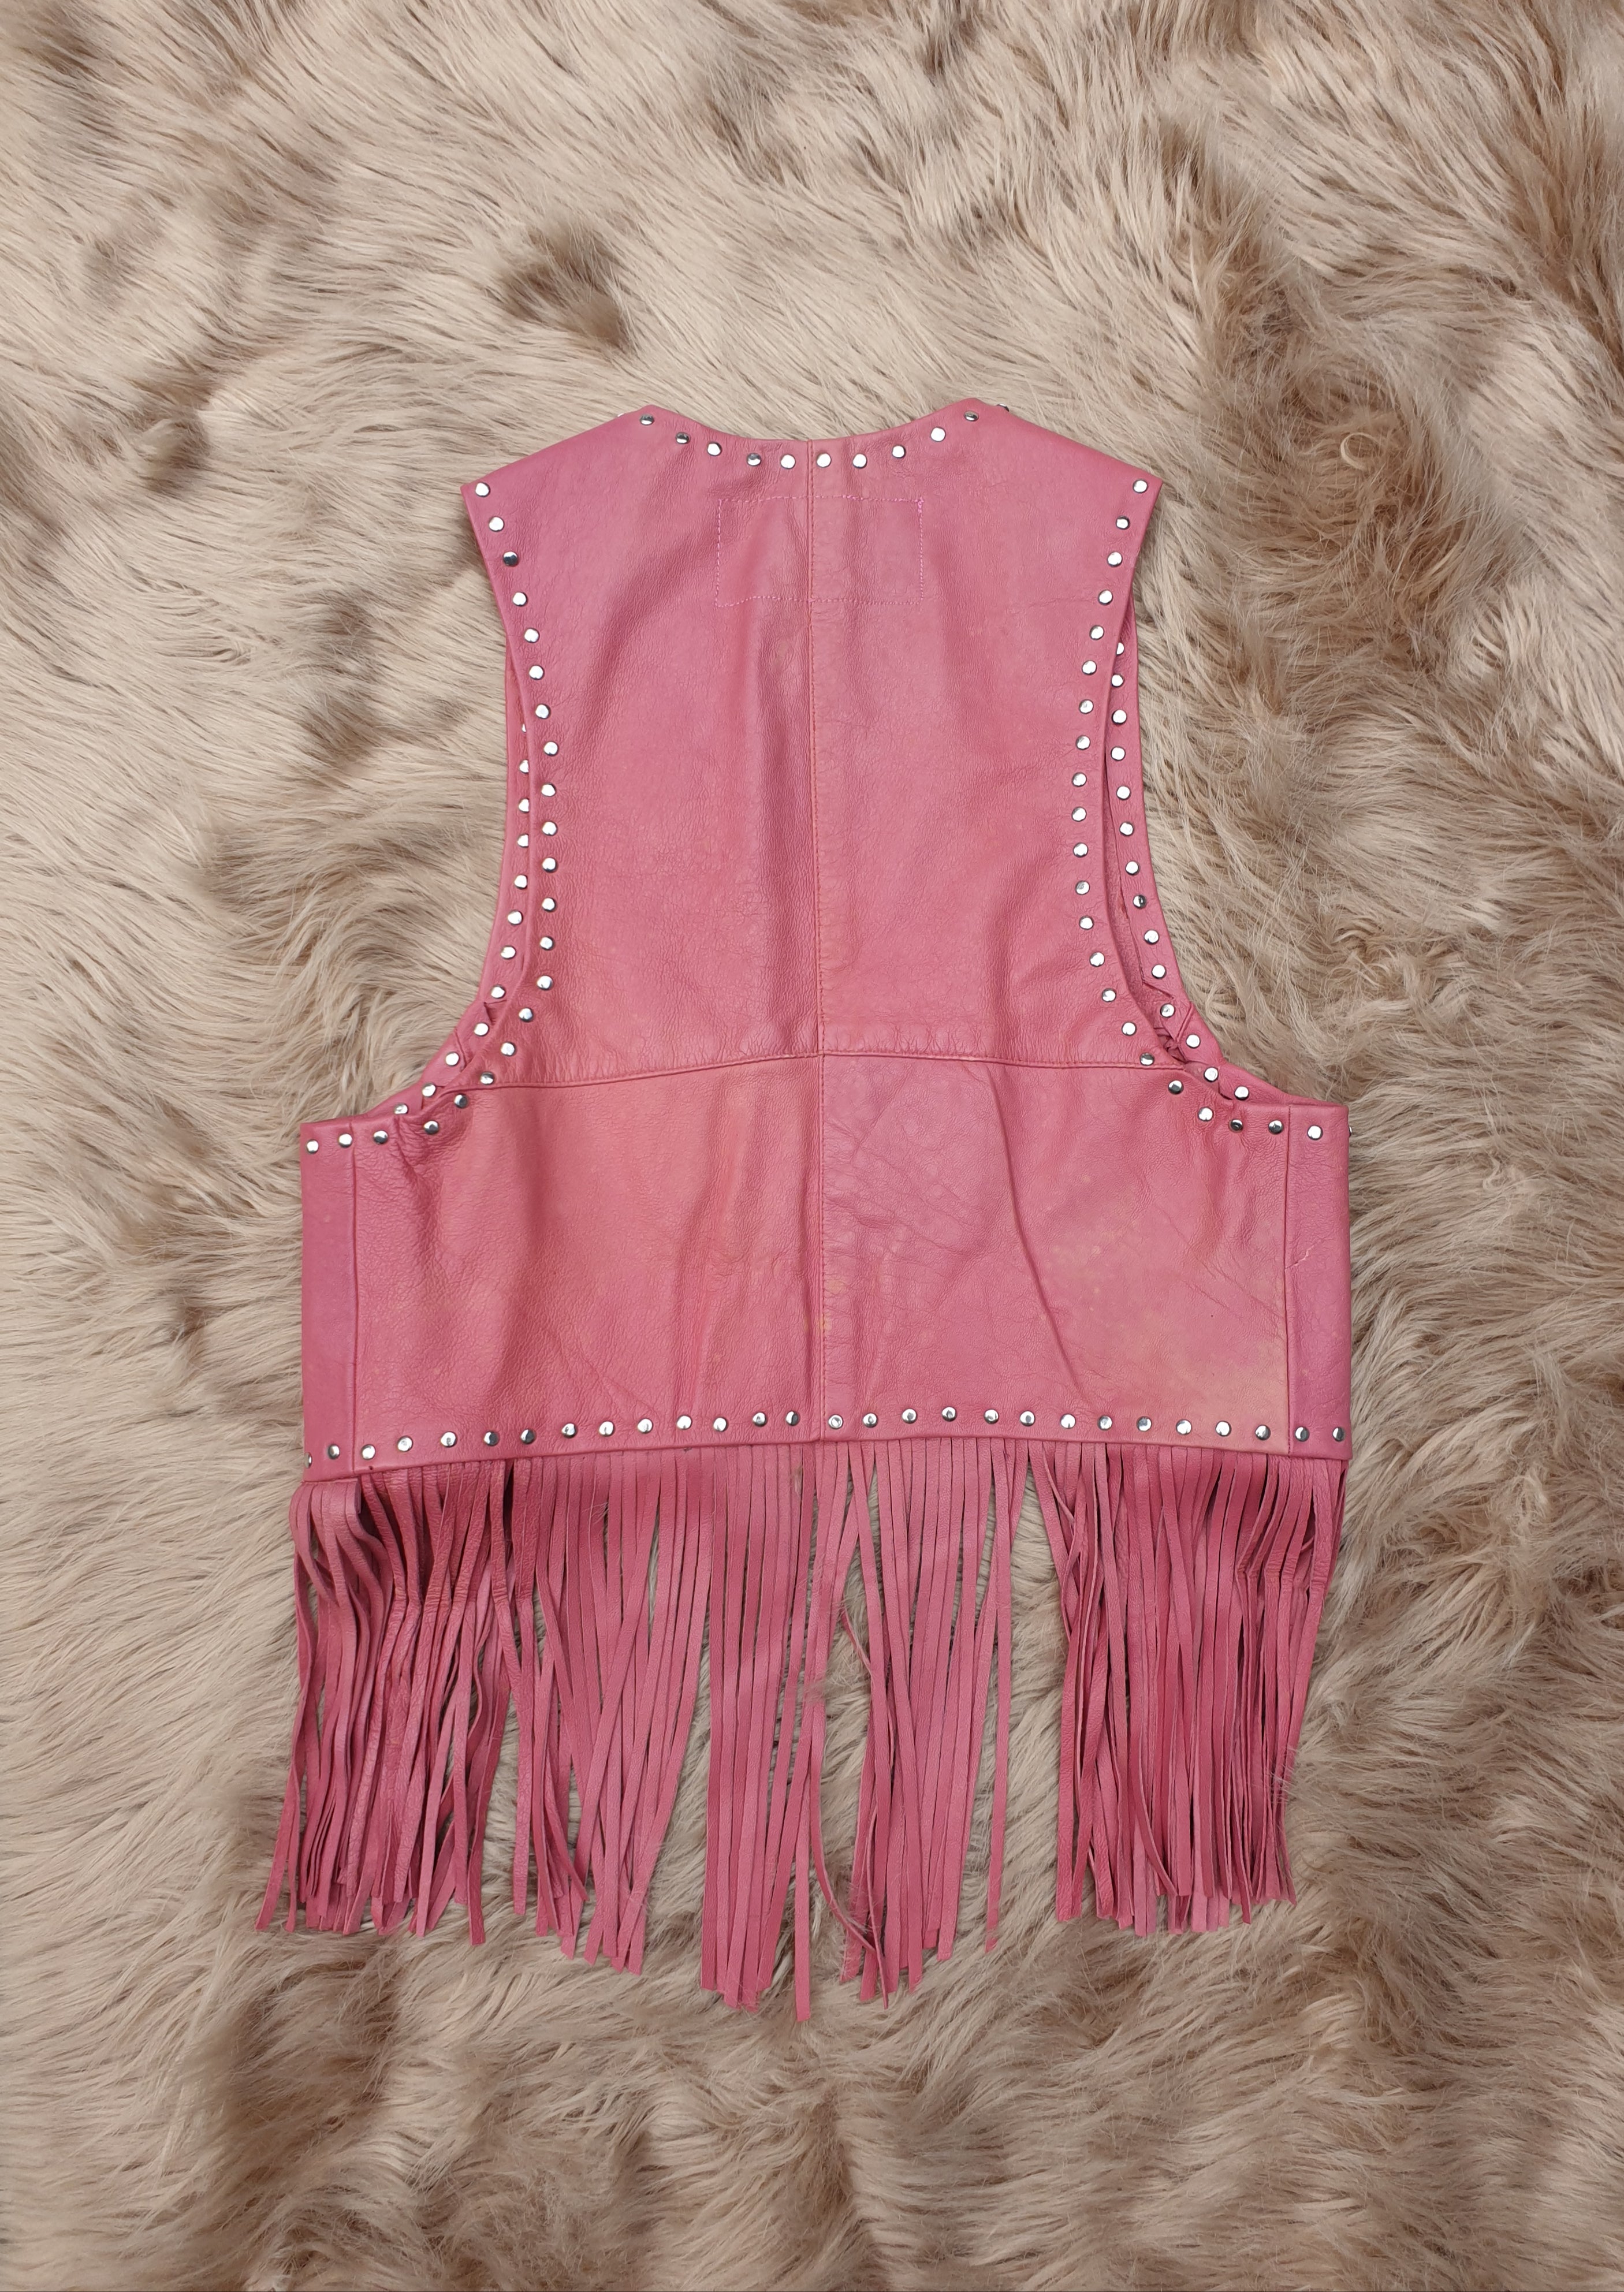 'Sweet Cherry Pie' Pink Leather Fringe Vest